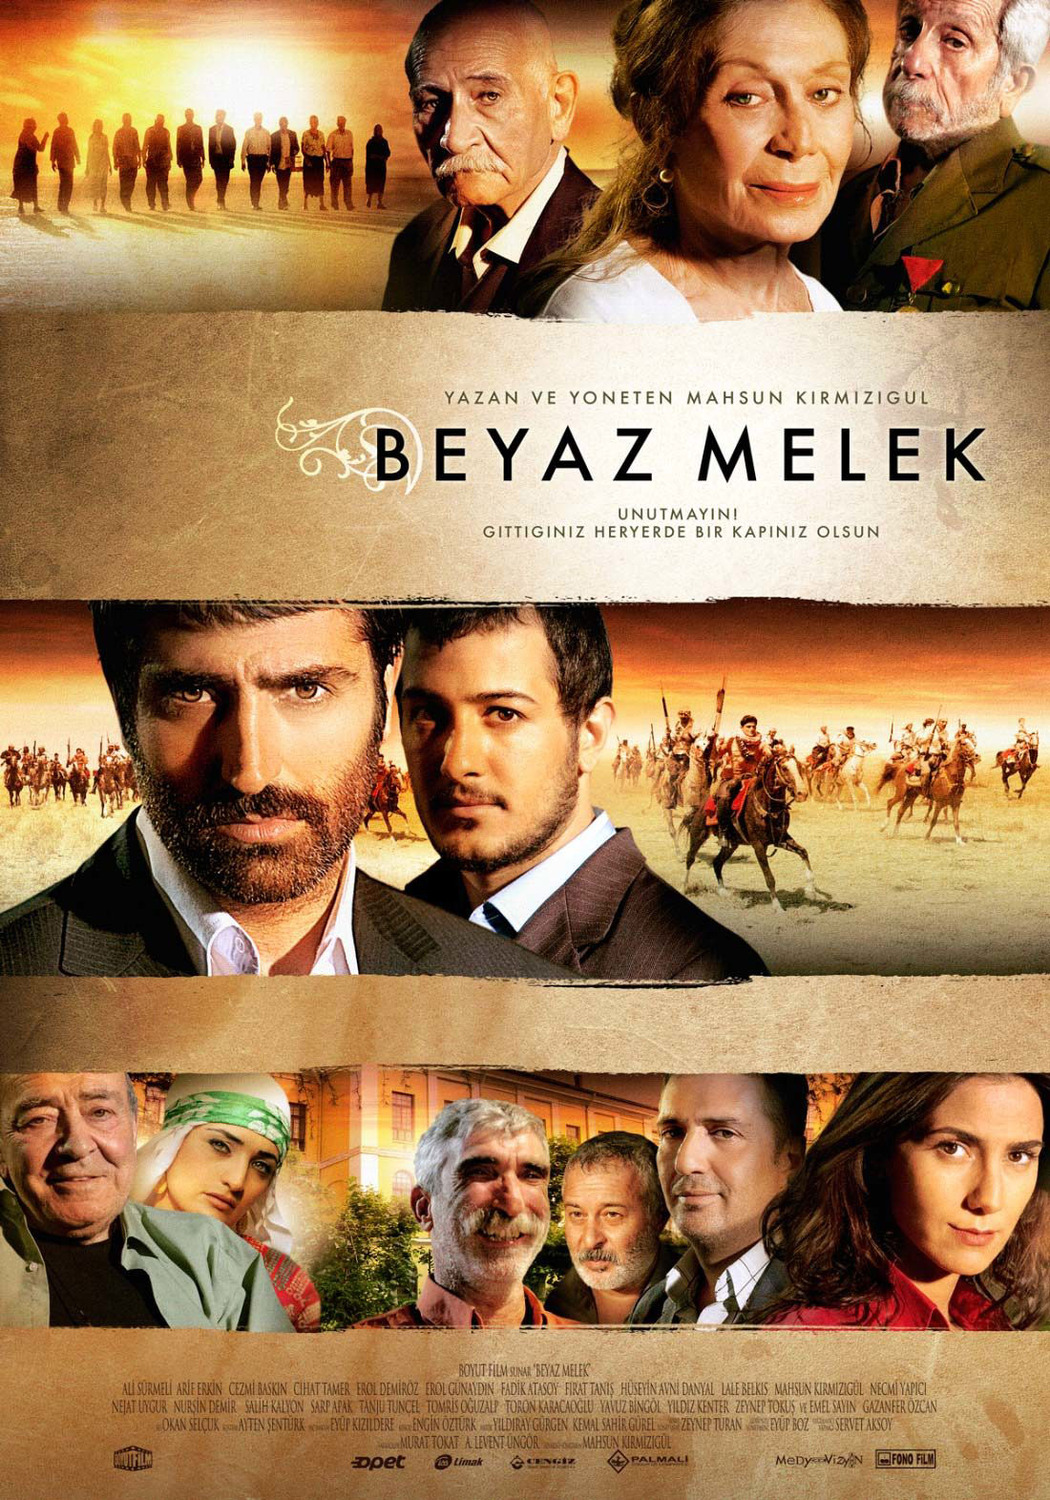 Extra Large Movie Poster Image for Beyaz melek (aka The White Angel) (#2 of 2)